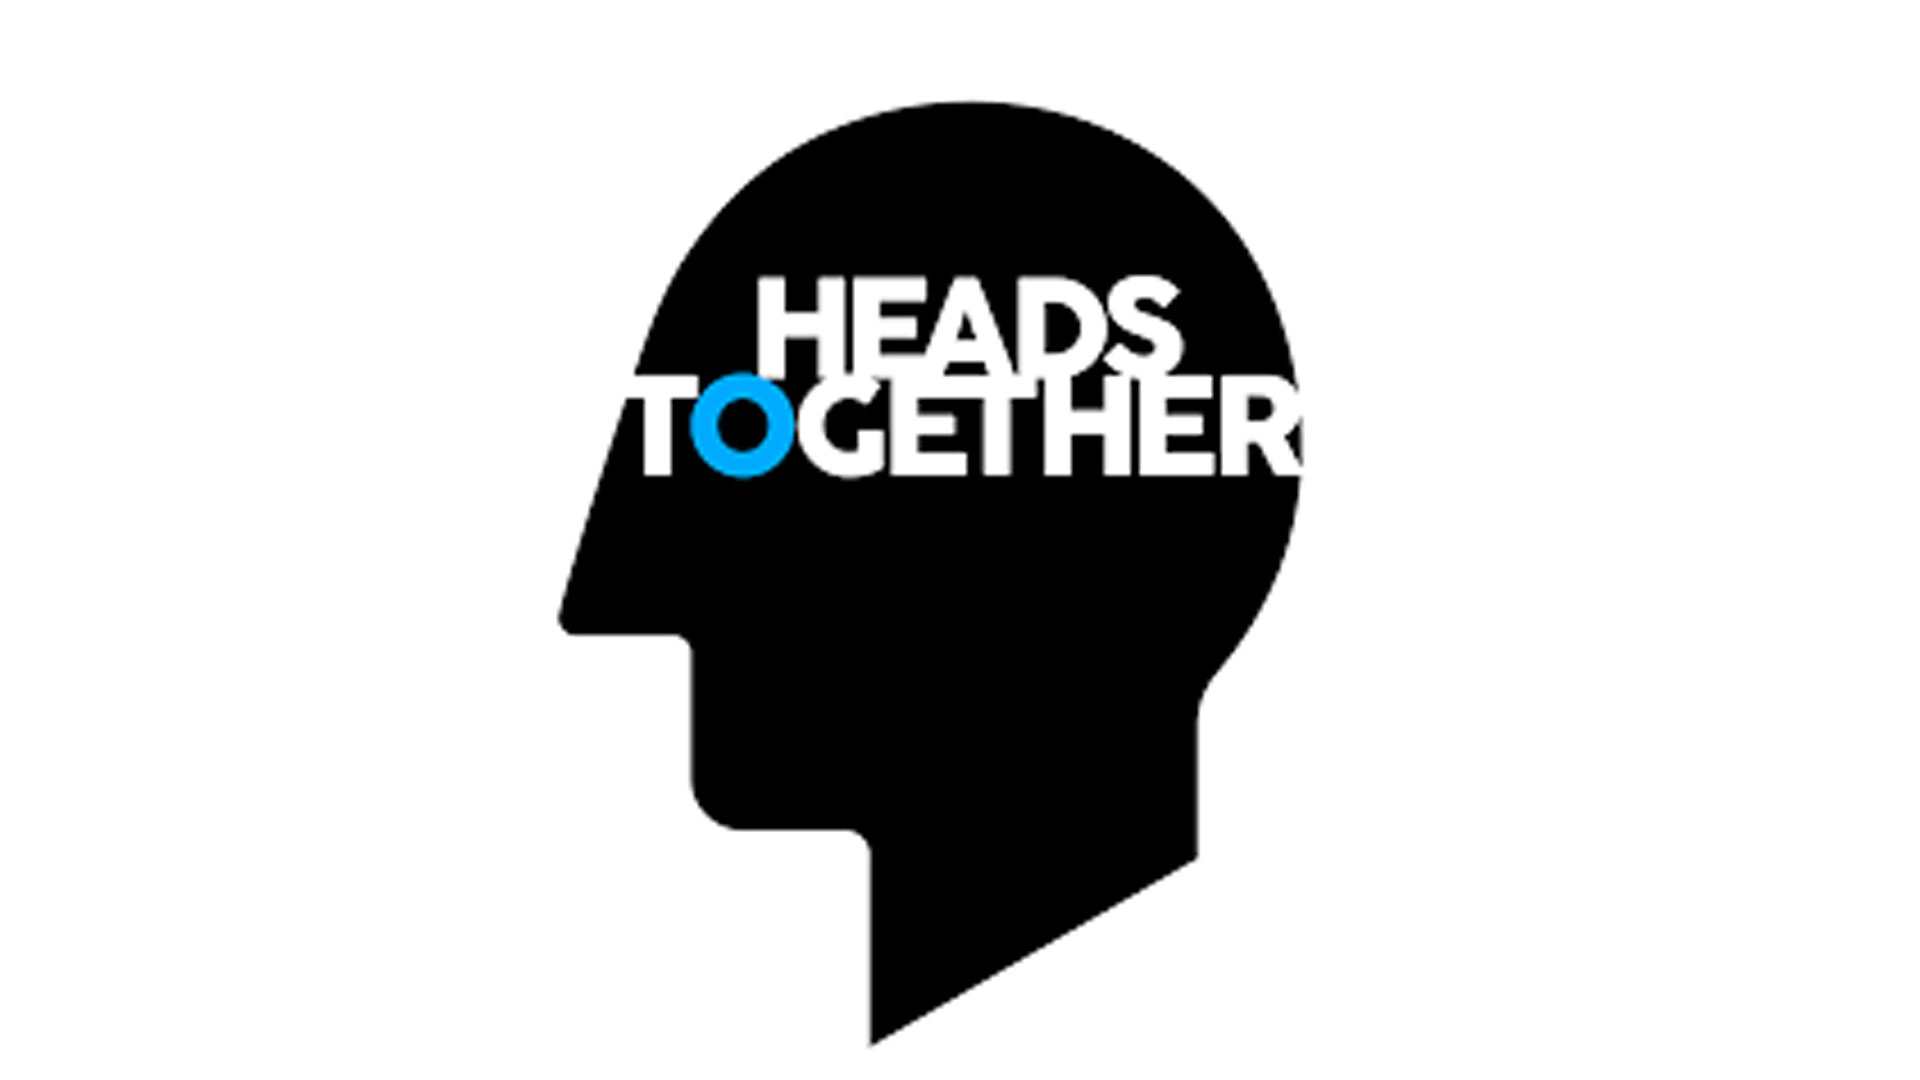 Heads together logo.